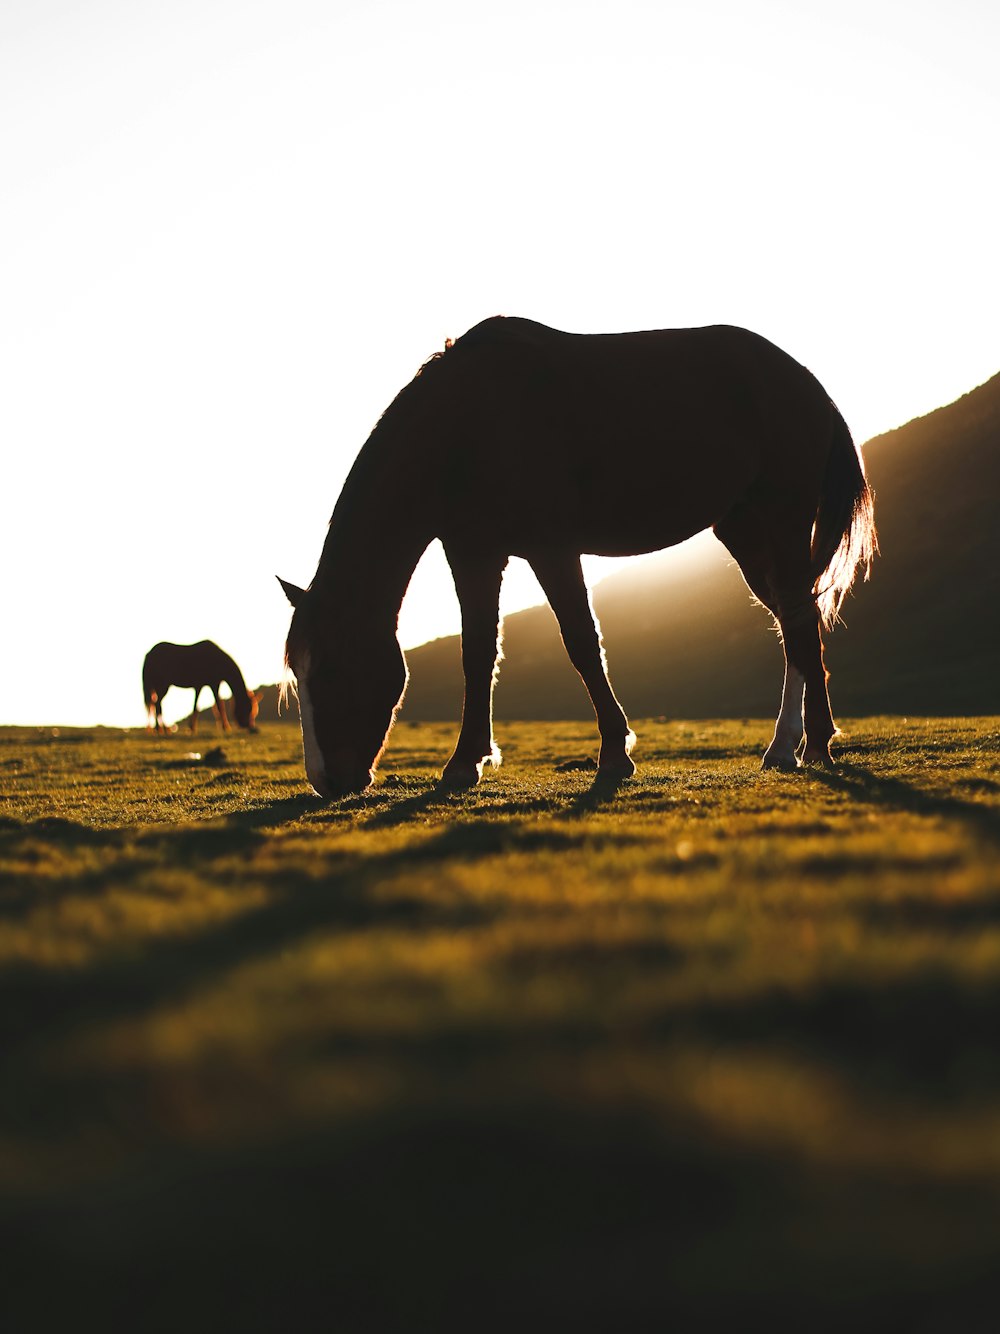 a horse and a calf grazing